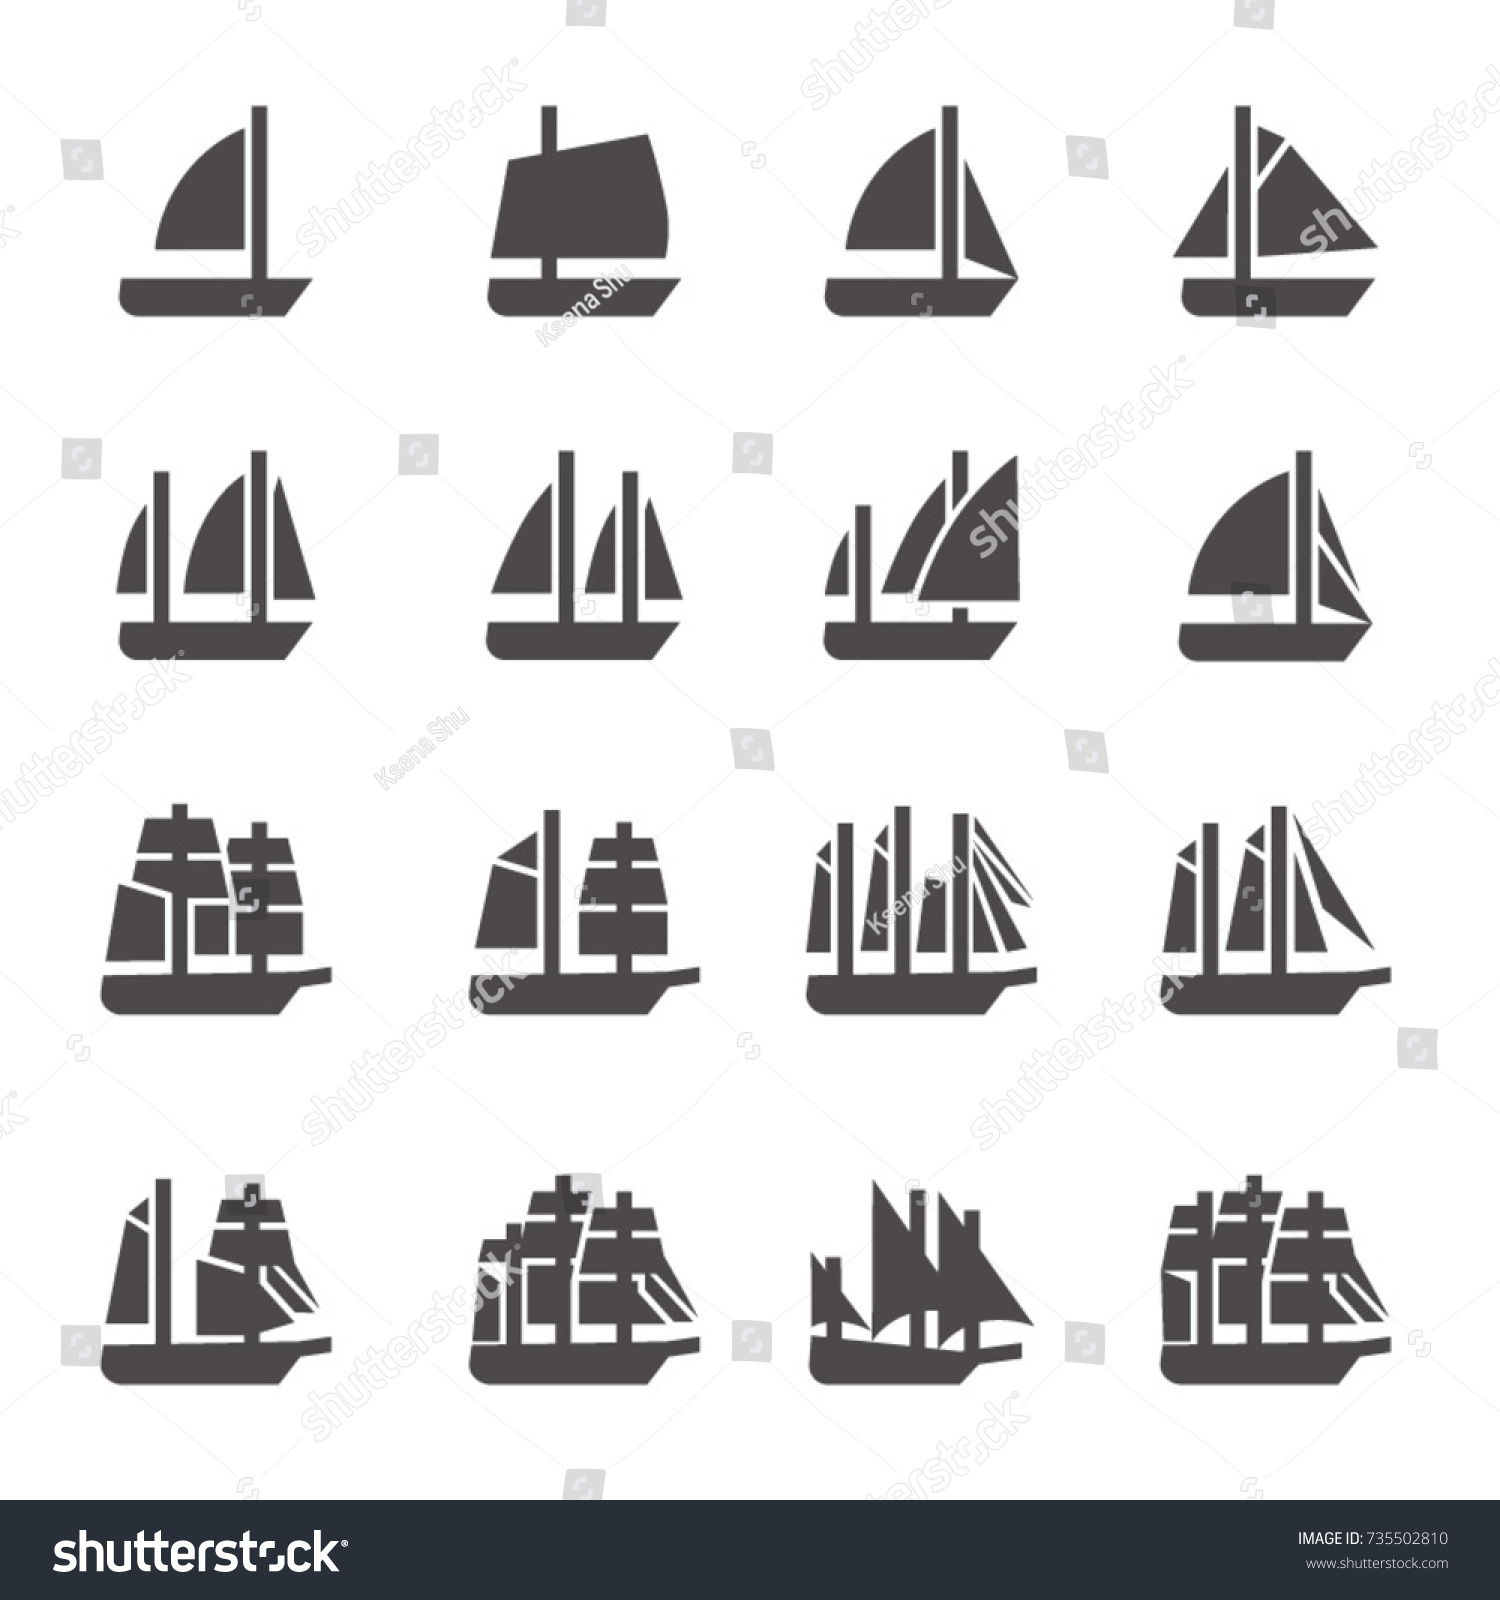 SVG of Icons of sailing ships in glyph style / Ships like cat, yal, sloop, cutter, ketch, Bermuda schooner, yol, tender, brig, brigantine, schooner, cruiser yacht, mars schooner, frigate, galley, corvette svg